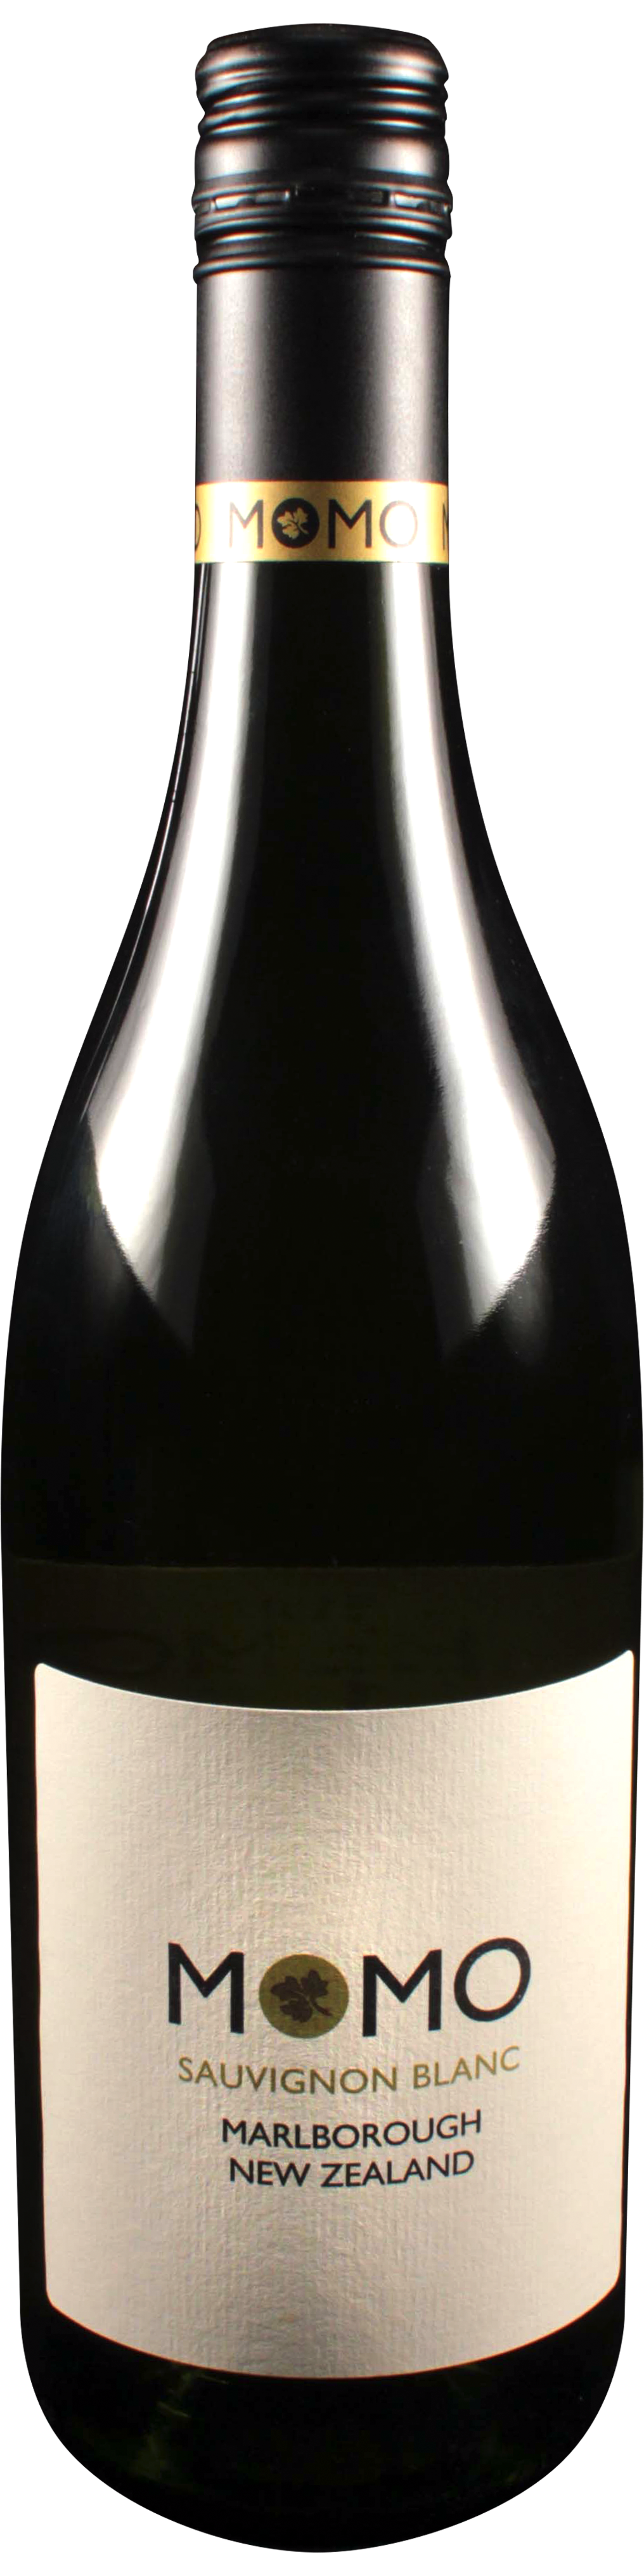 Bottle shot of 2011 Momo Sauvignon Blanc